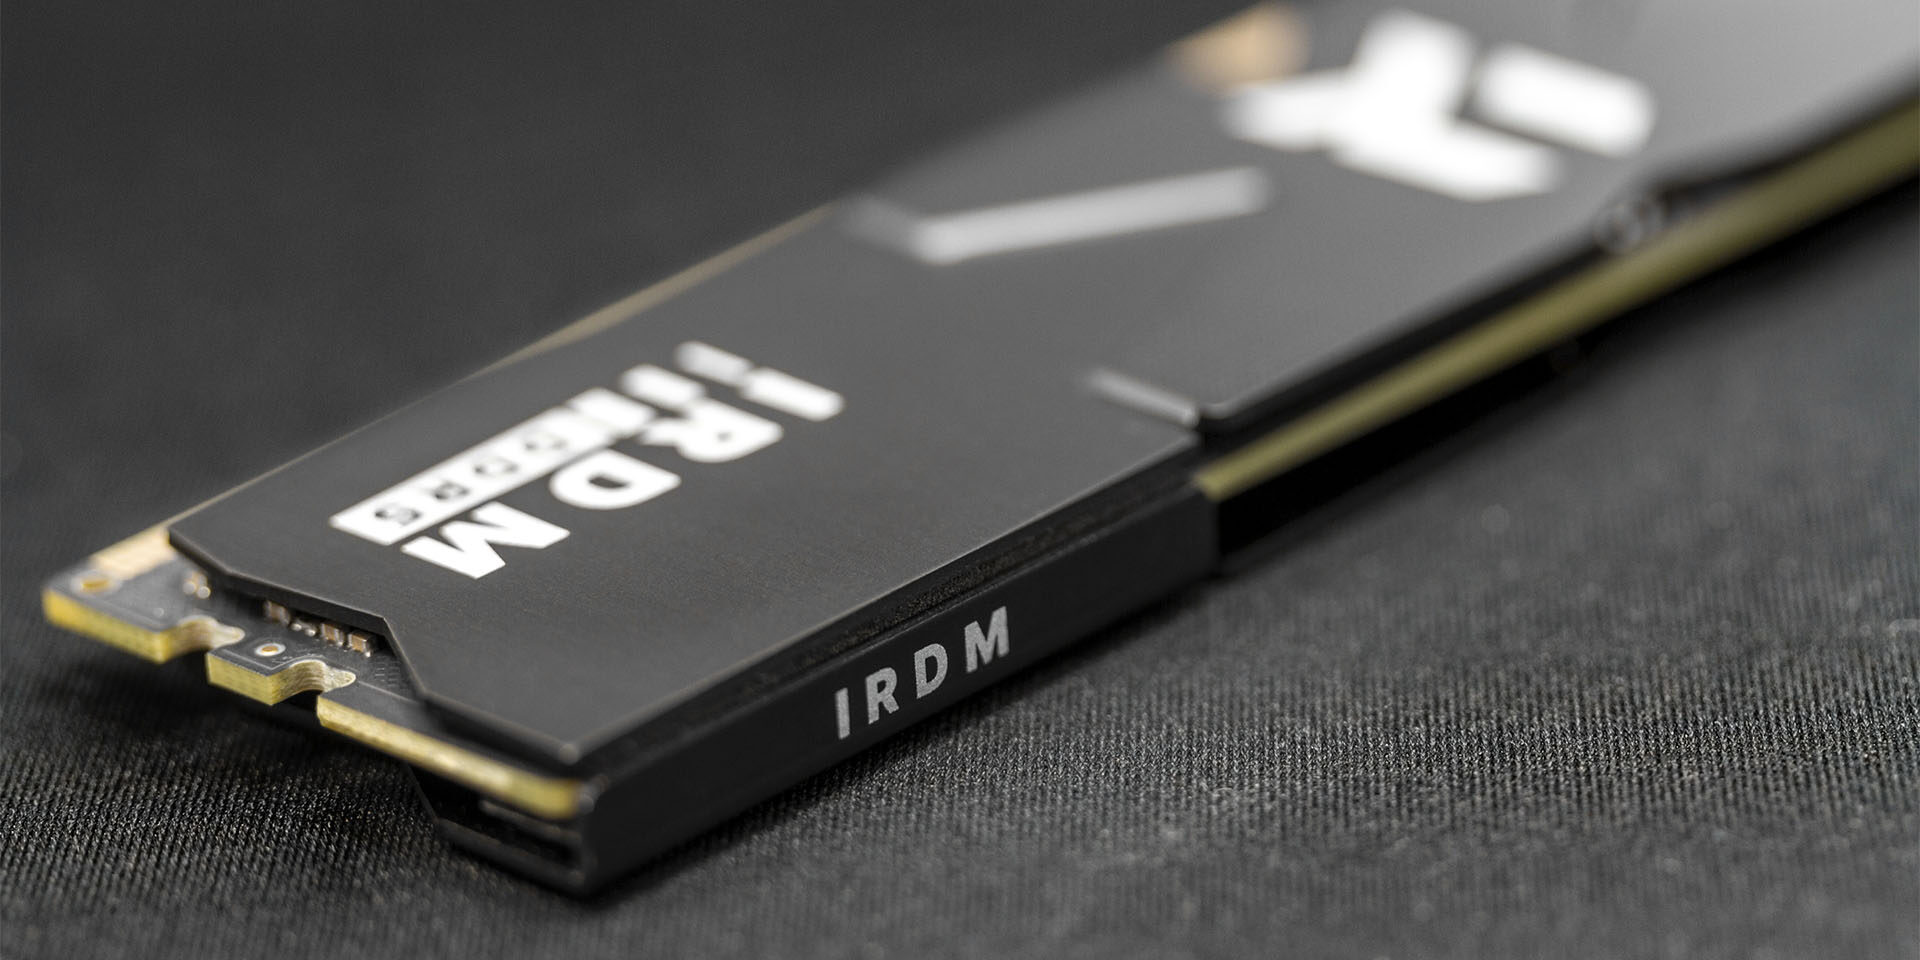 IRDM DDR5 memory module